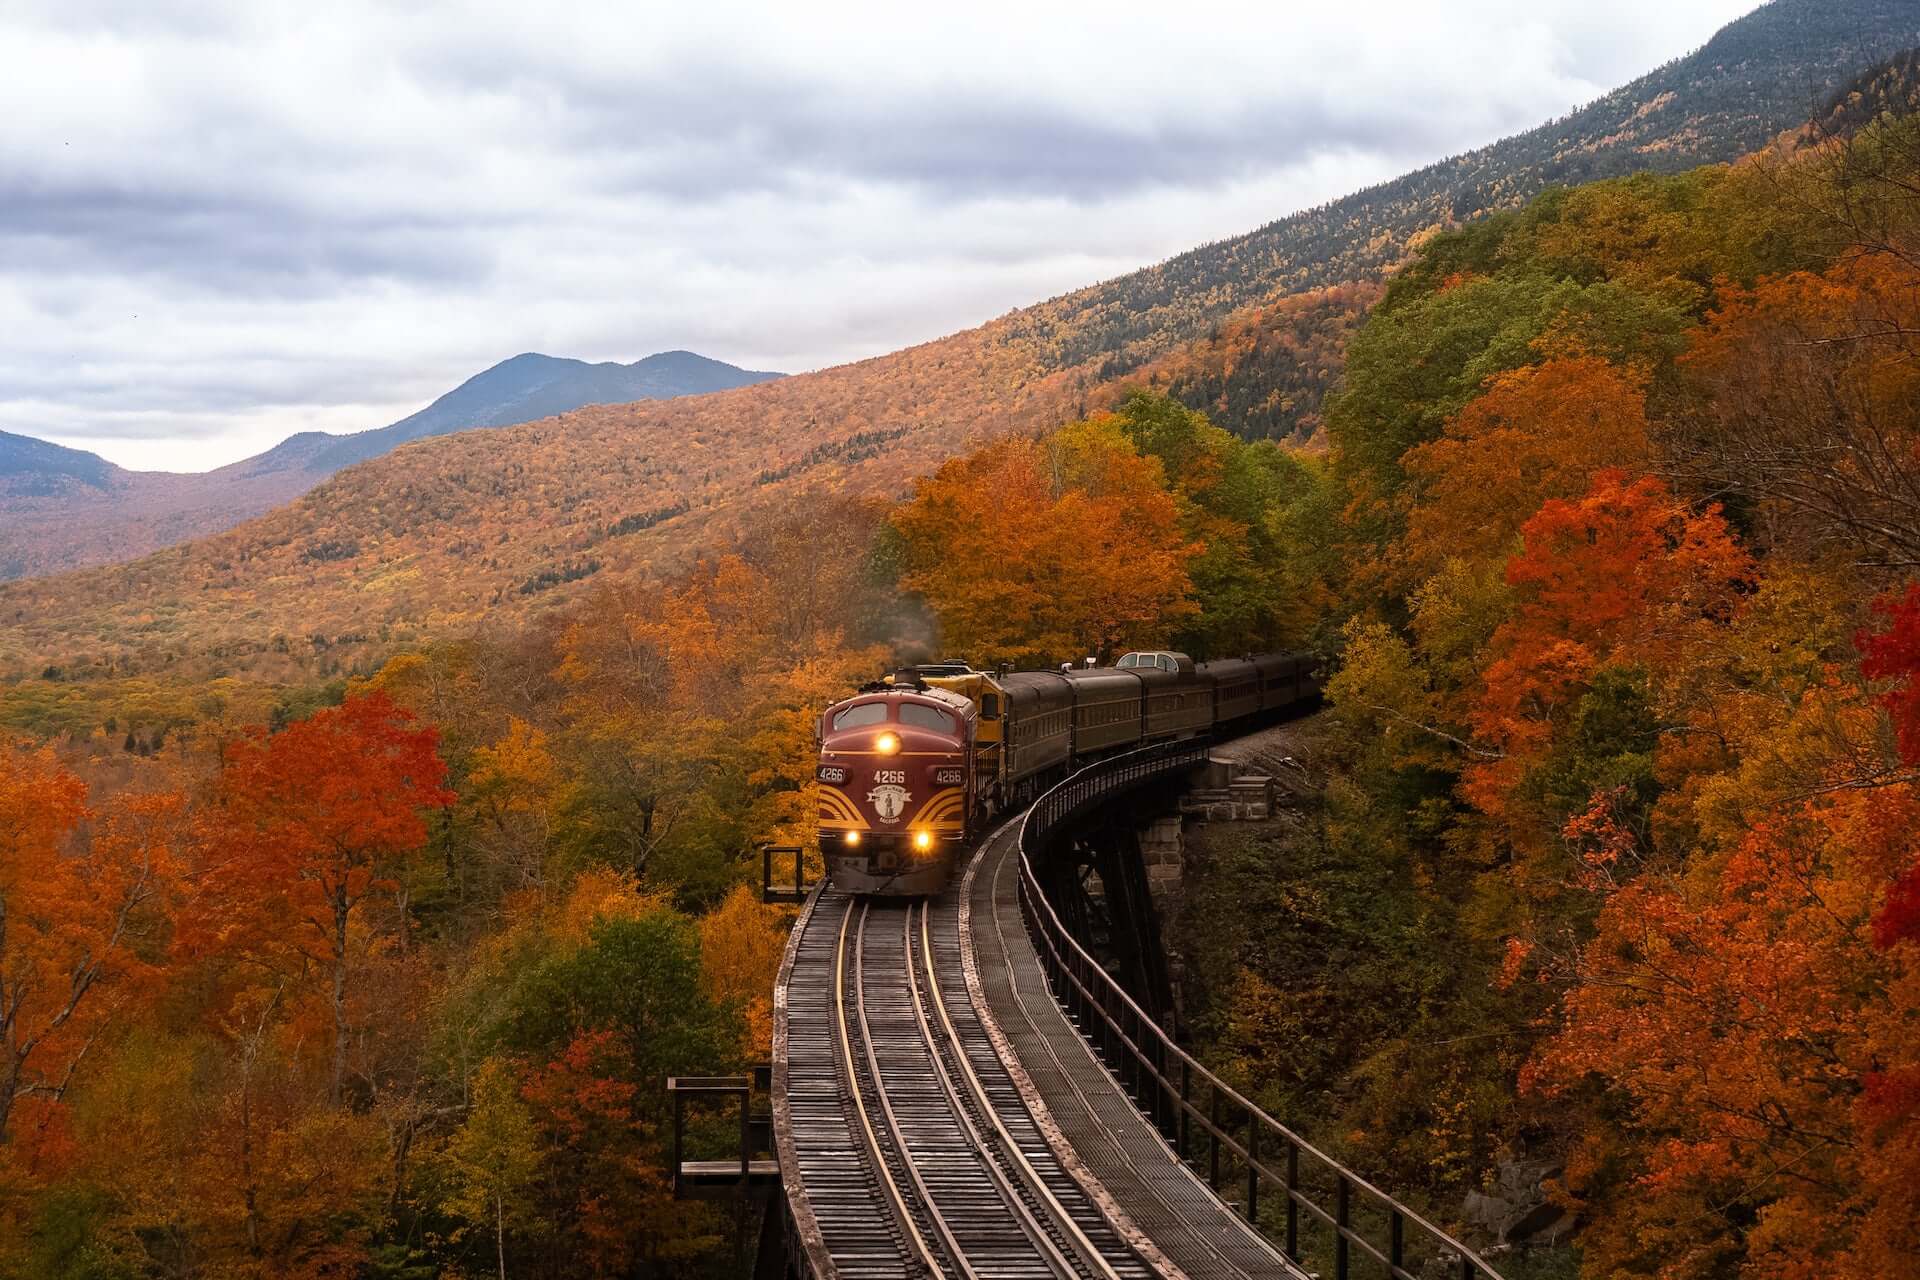 A train going through an autumnal hillside on a cloudy day.